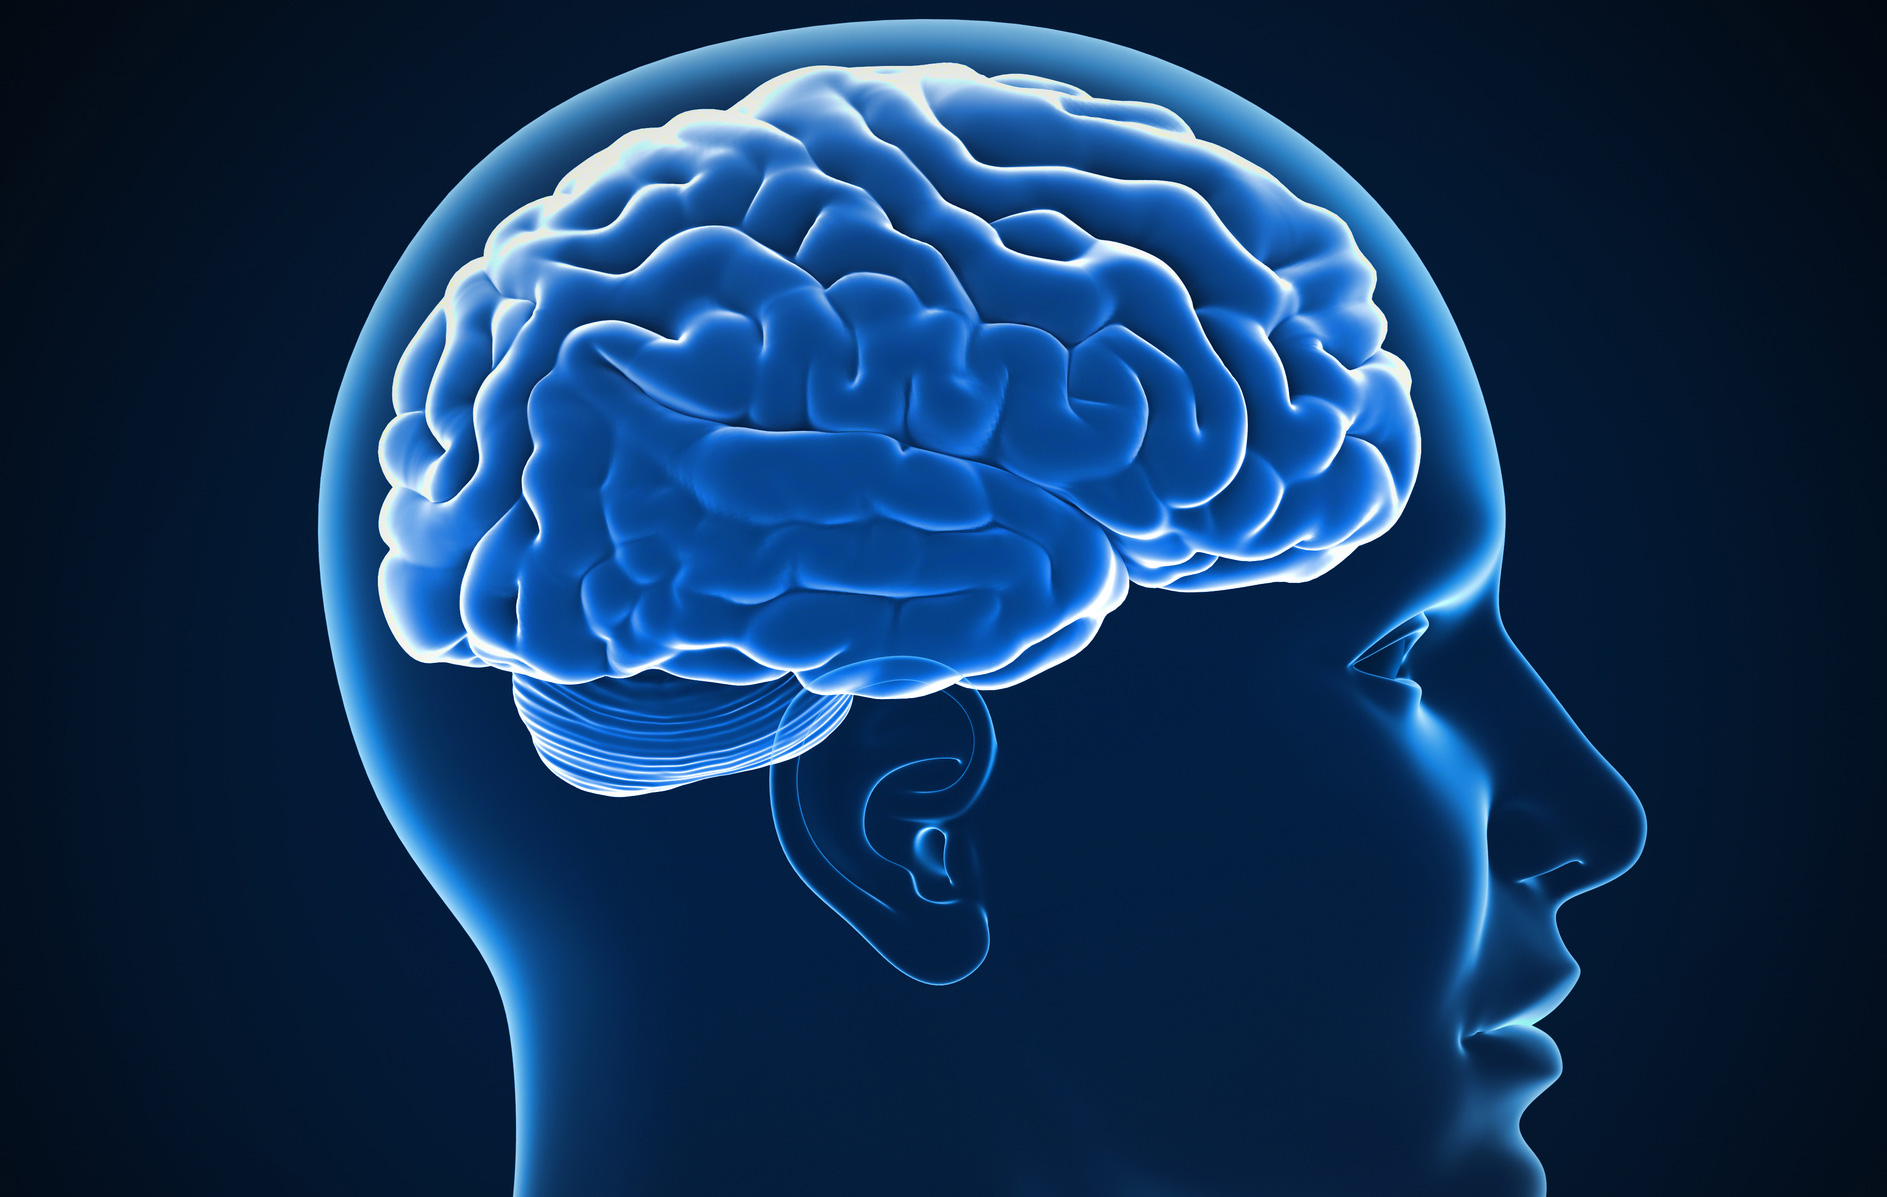 Symbolic image of a brain